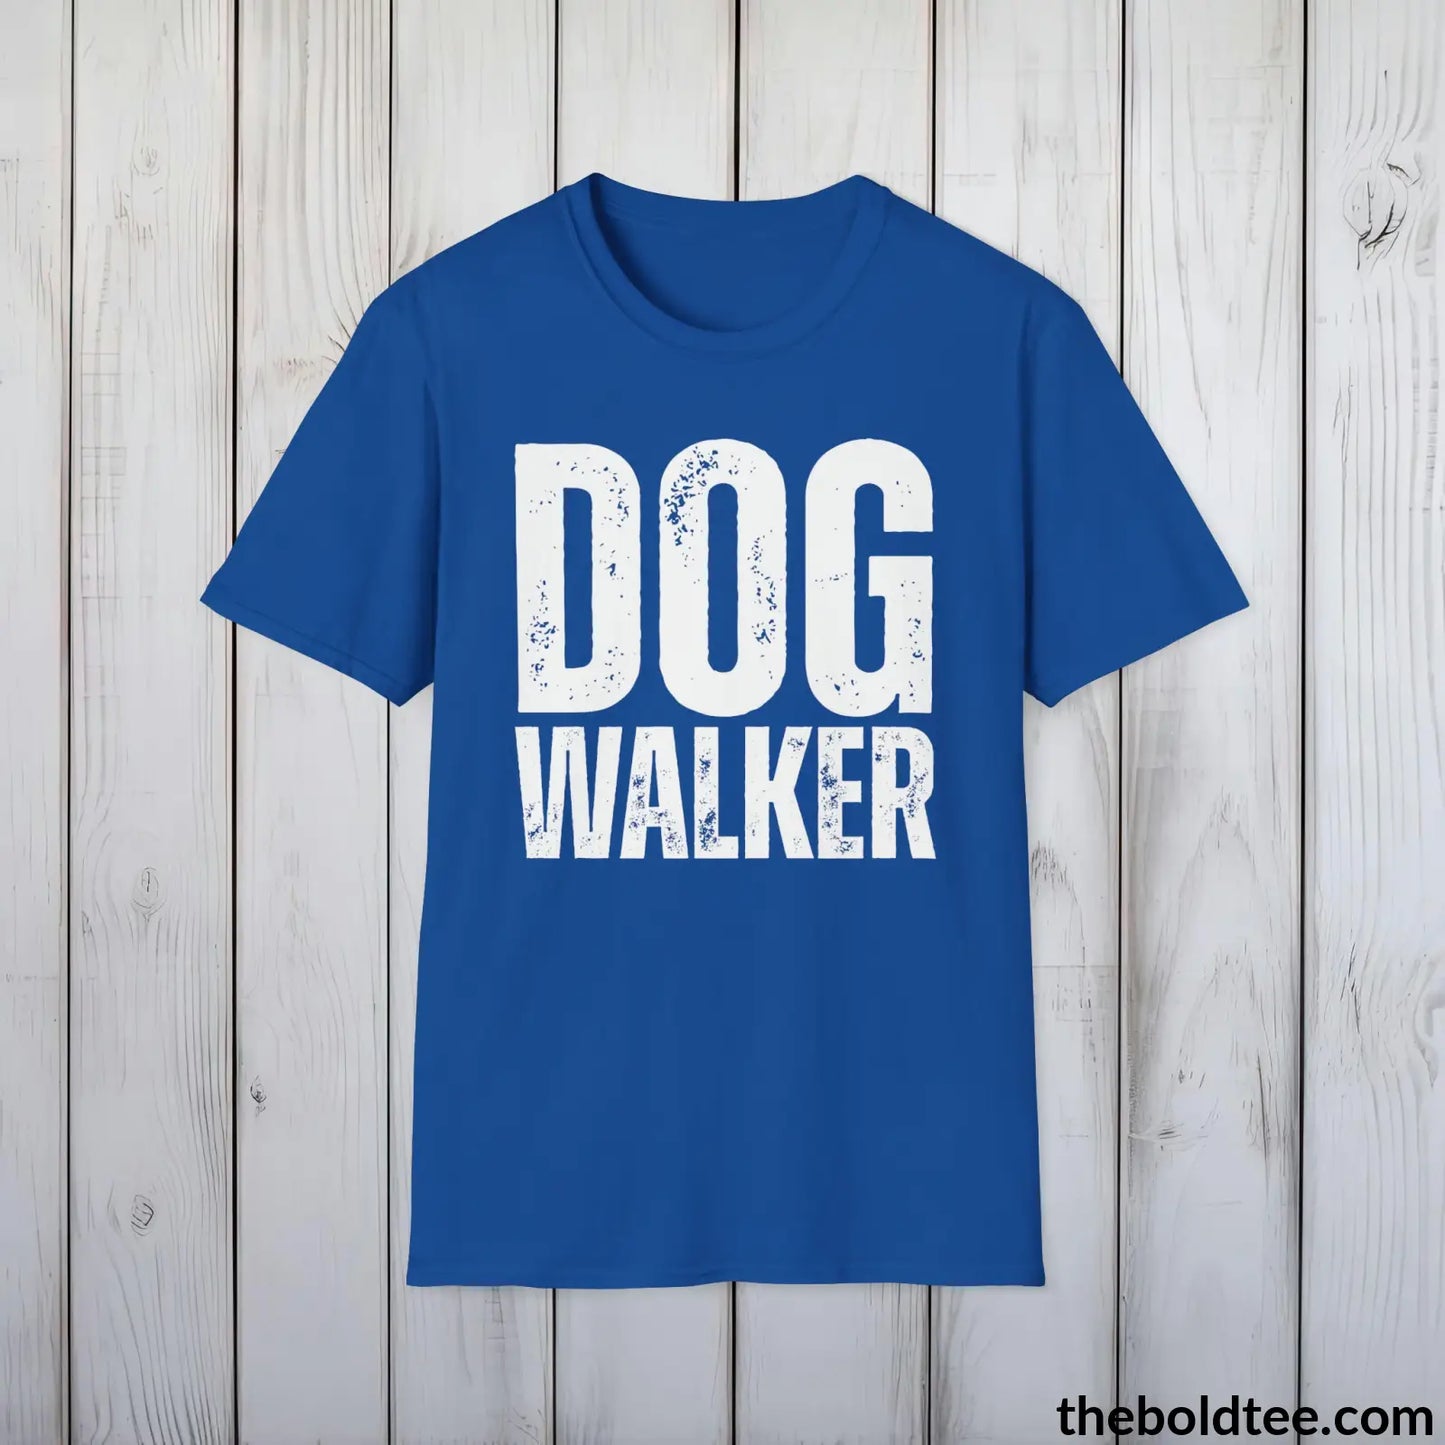 Dog Walker T-Shirt - Pet Owner Everyday Shirt - Funny Dog Lover Shirt - Pet Puppy Lover Shirt Gift - Comfort in 9 Colors